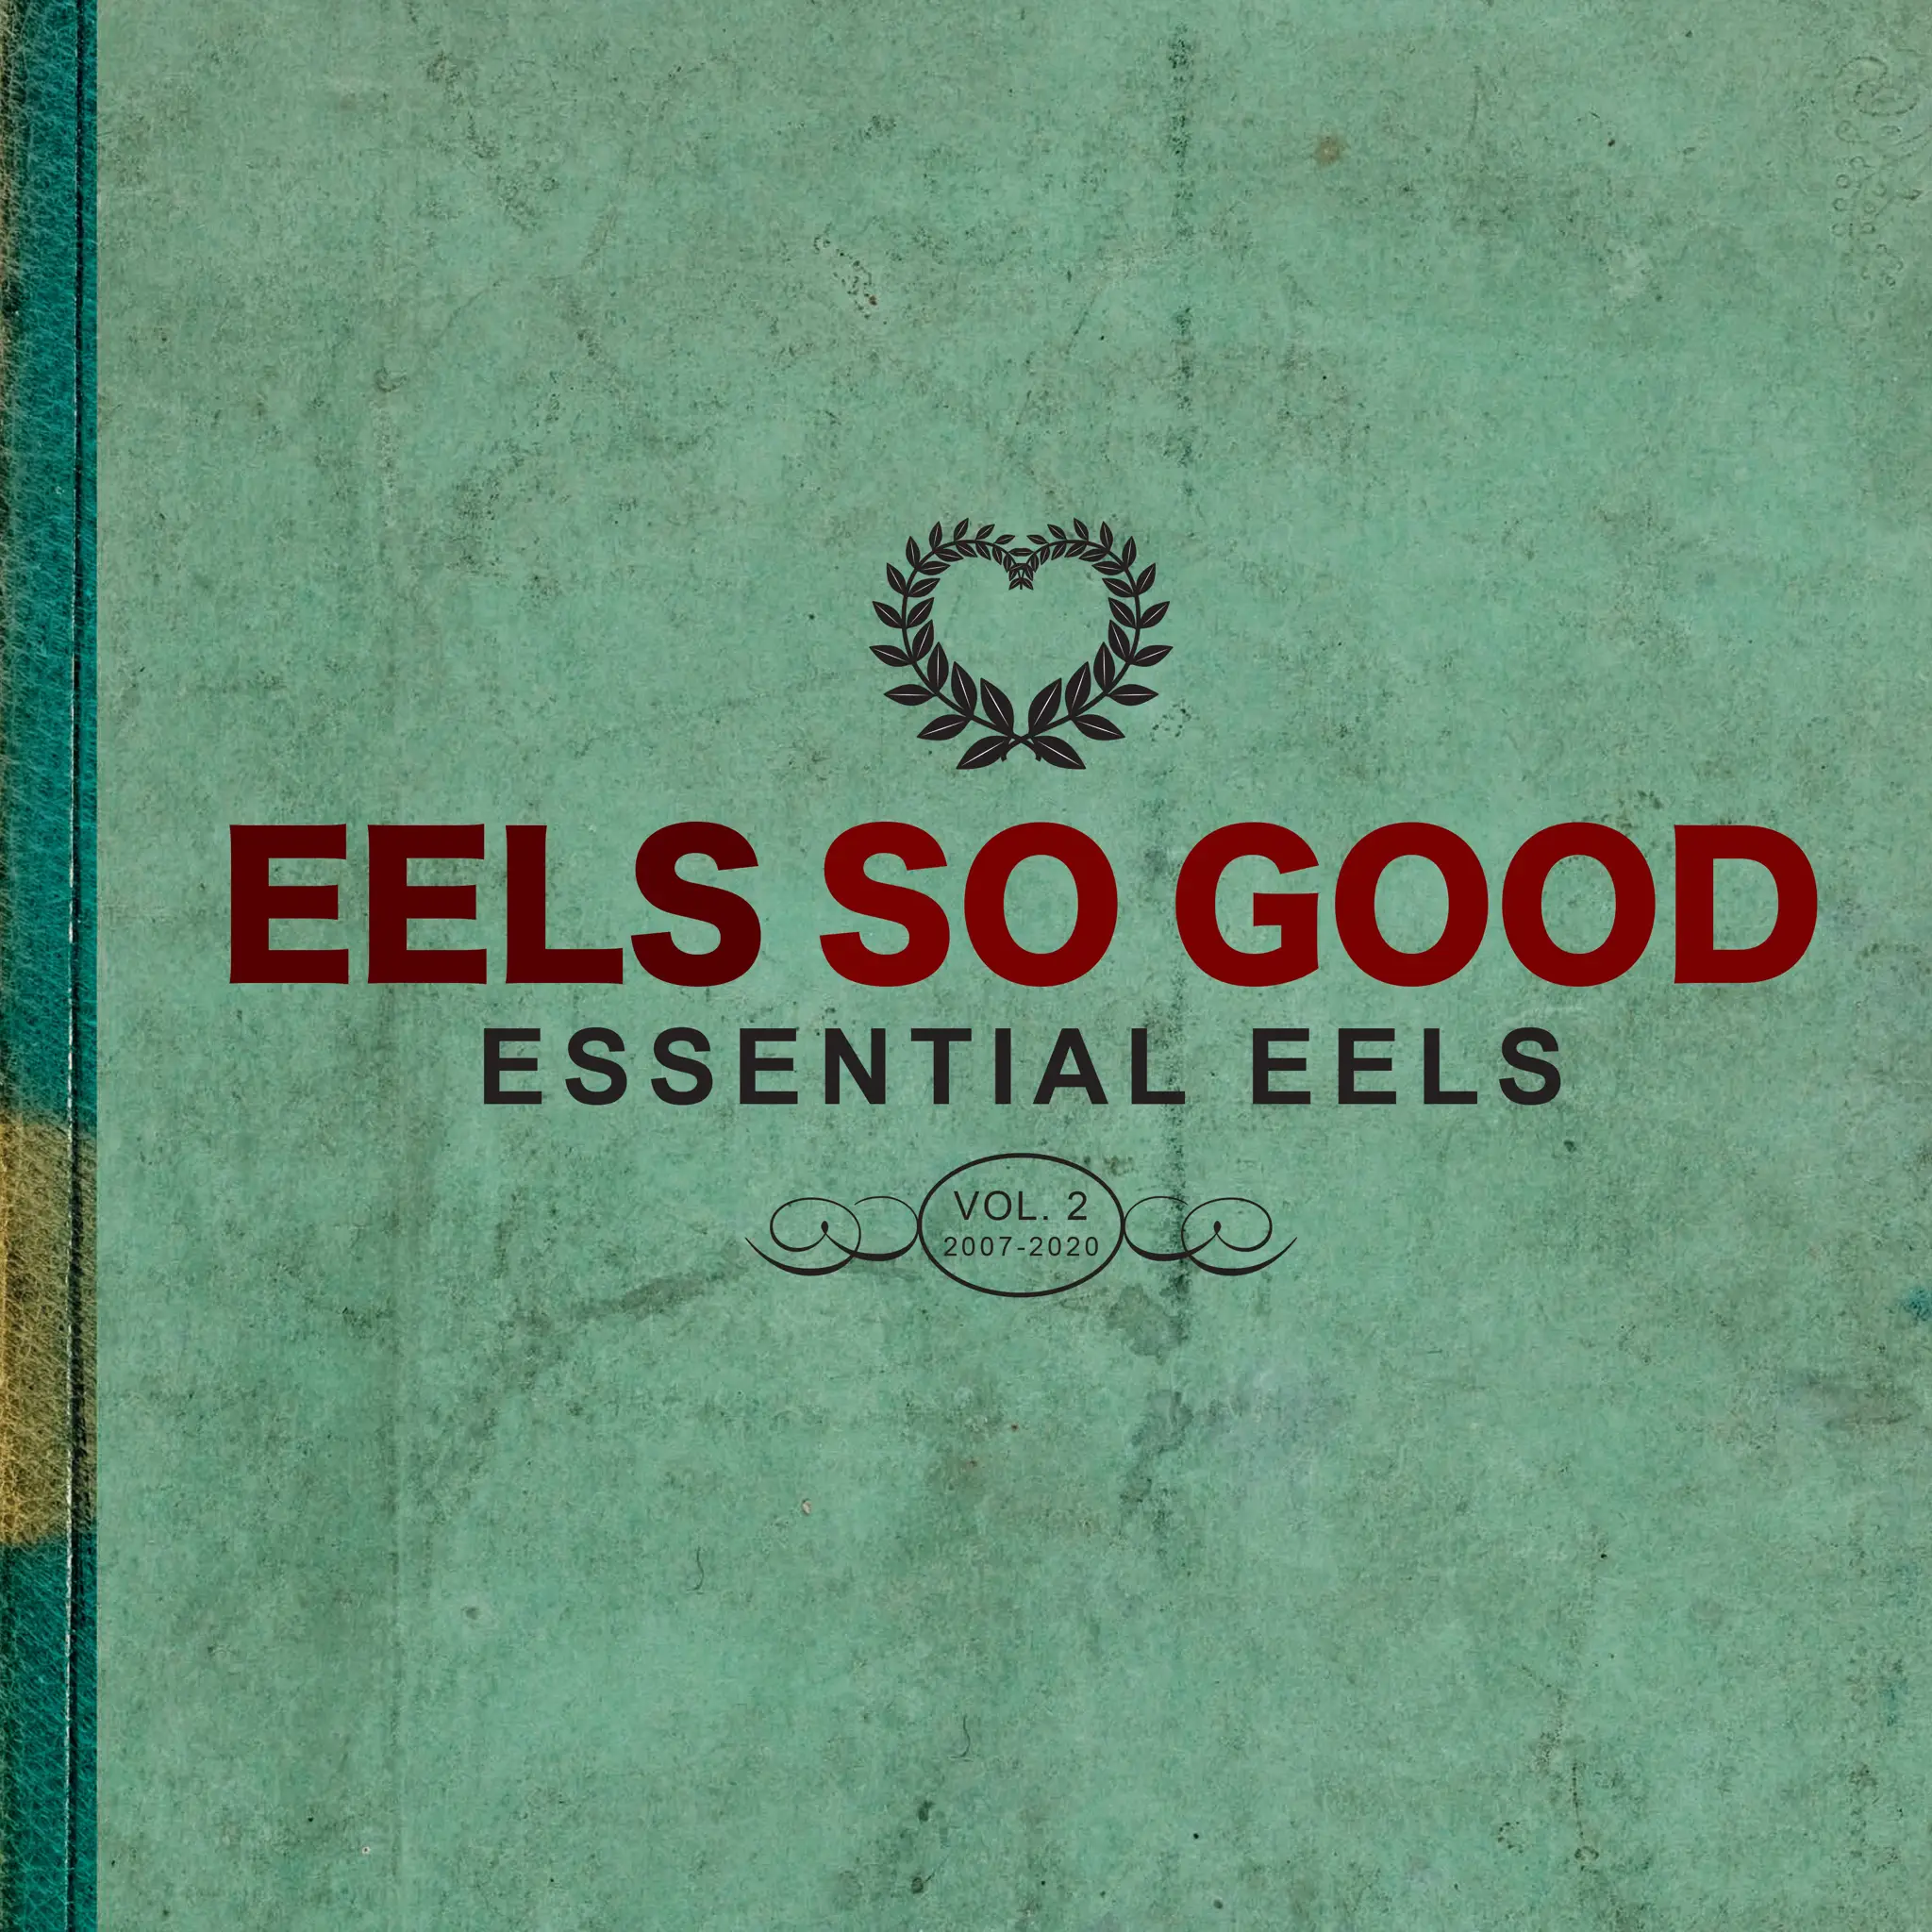 <strong>Eels - So Good: Essential Eels Vol. 2 (2007-2020)</strong> (Vinyl LP - green)